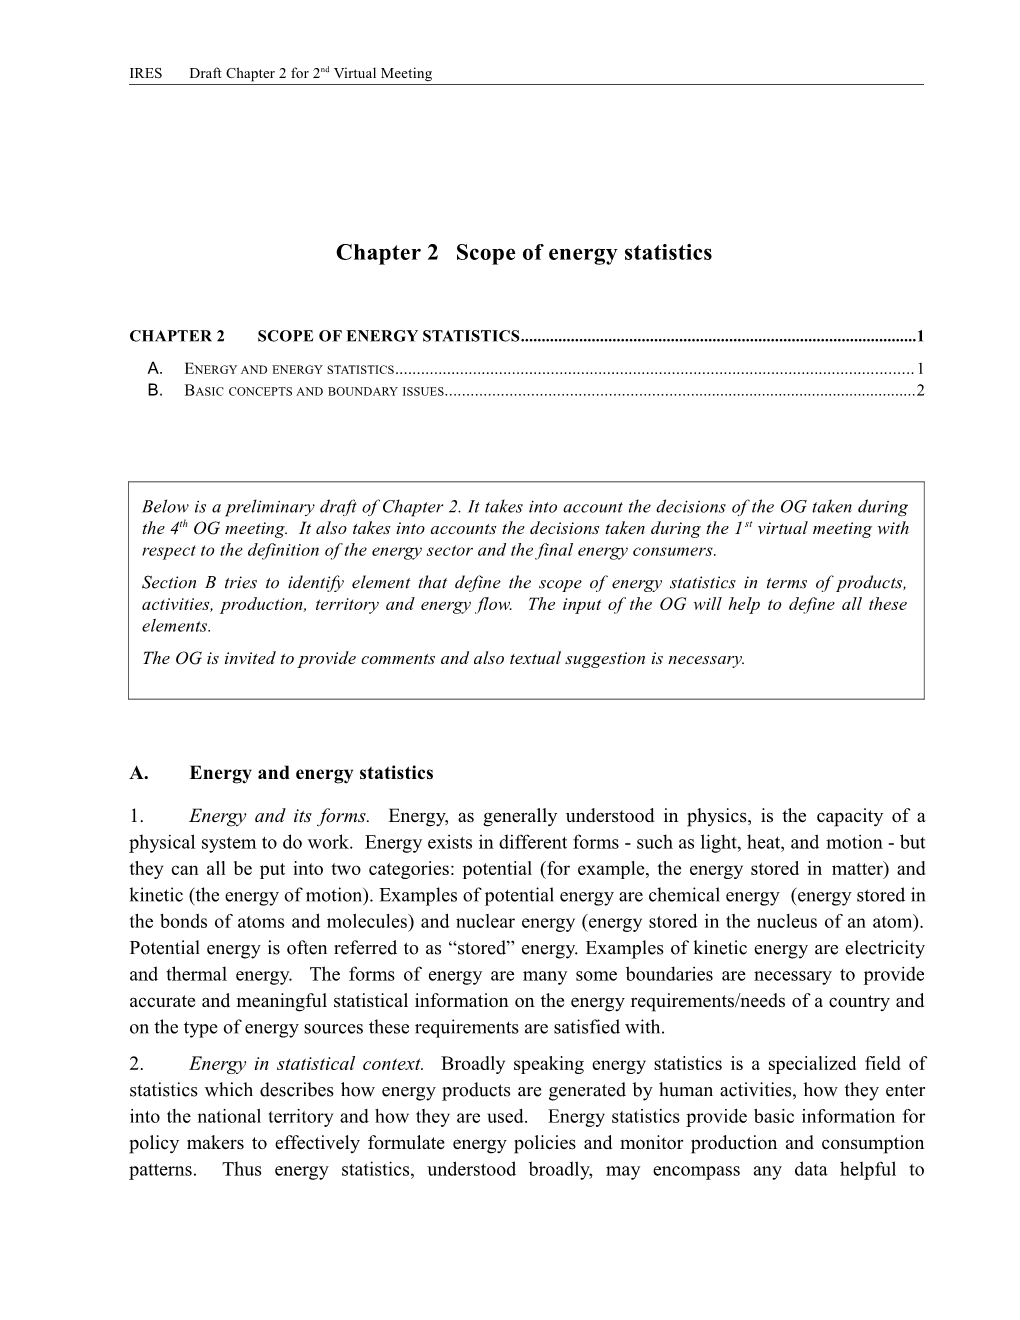 Chapter 2 Scope of Energy Statistics